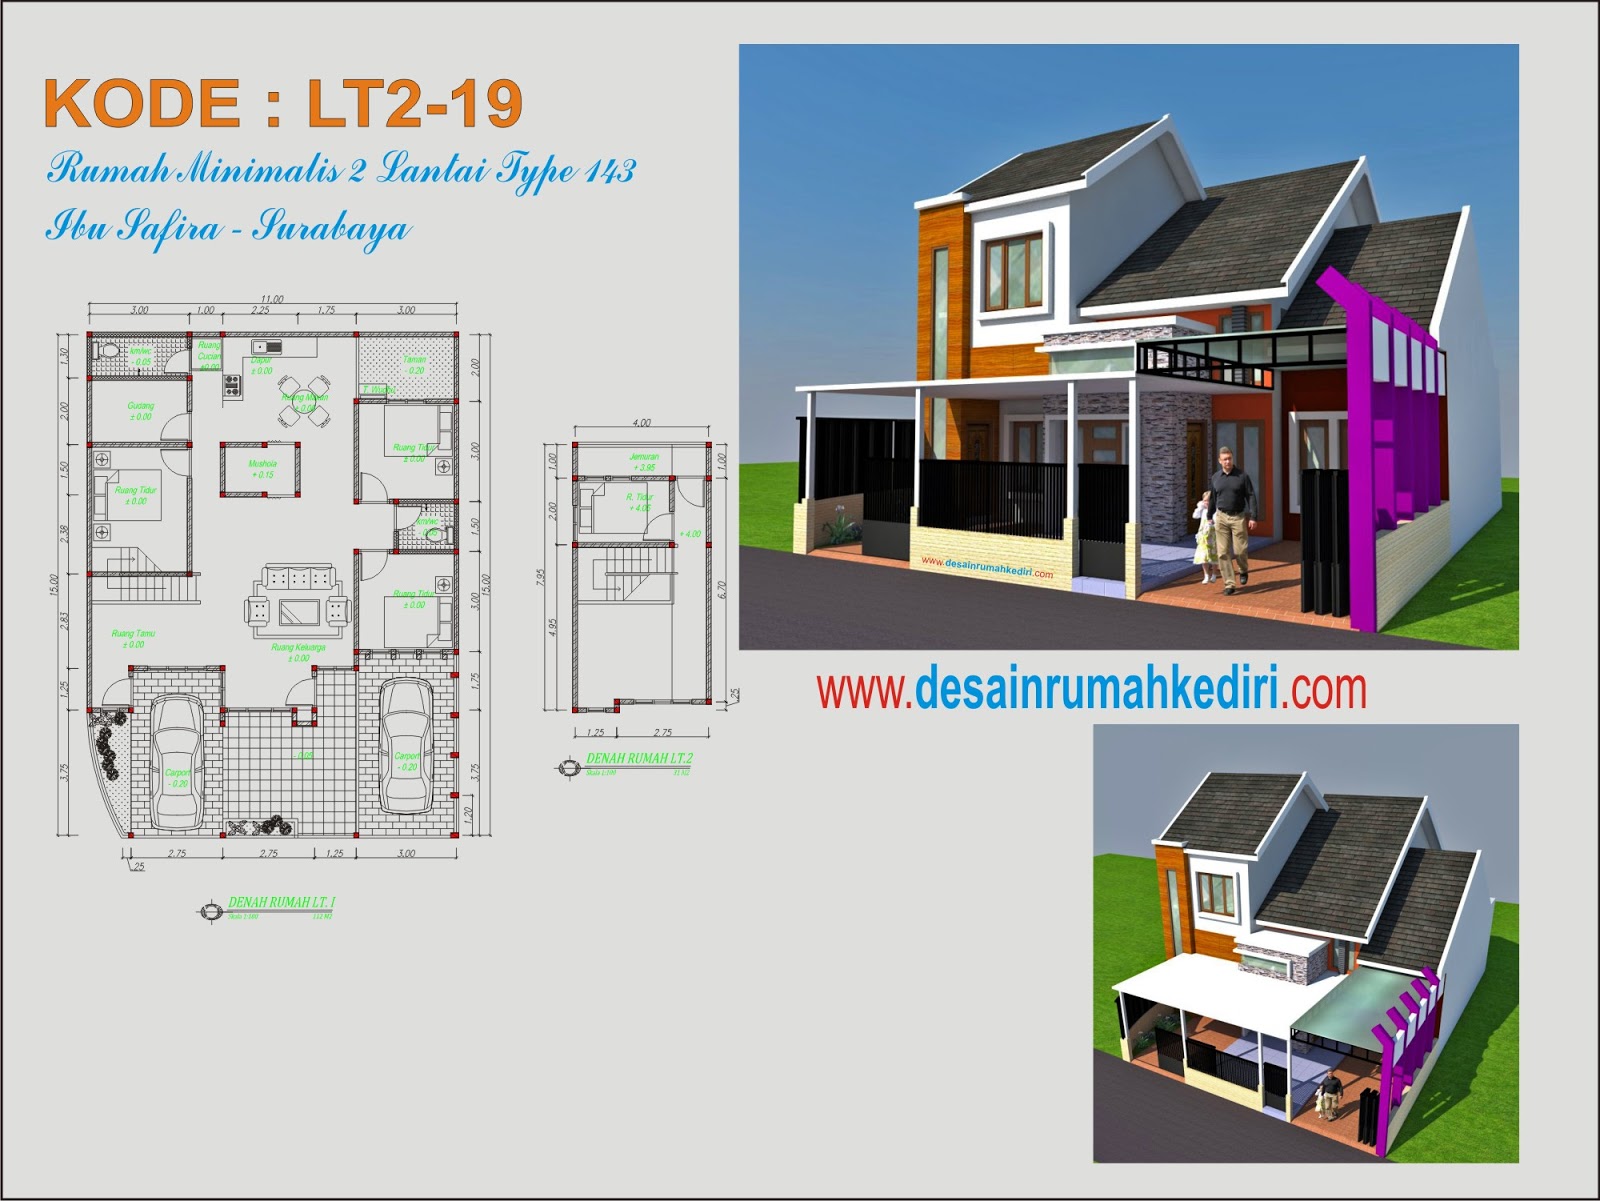 Lt2 19 Rumah Minimalis Modern 2 Lantai Ibu Safira Surabaya